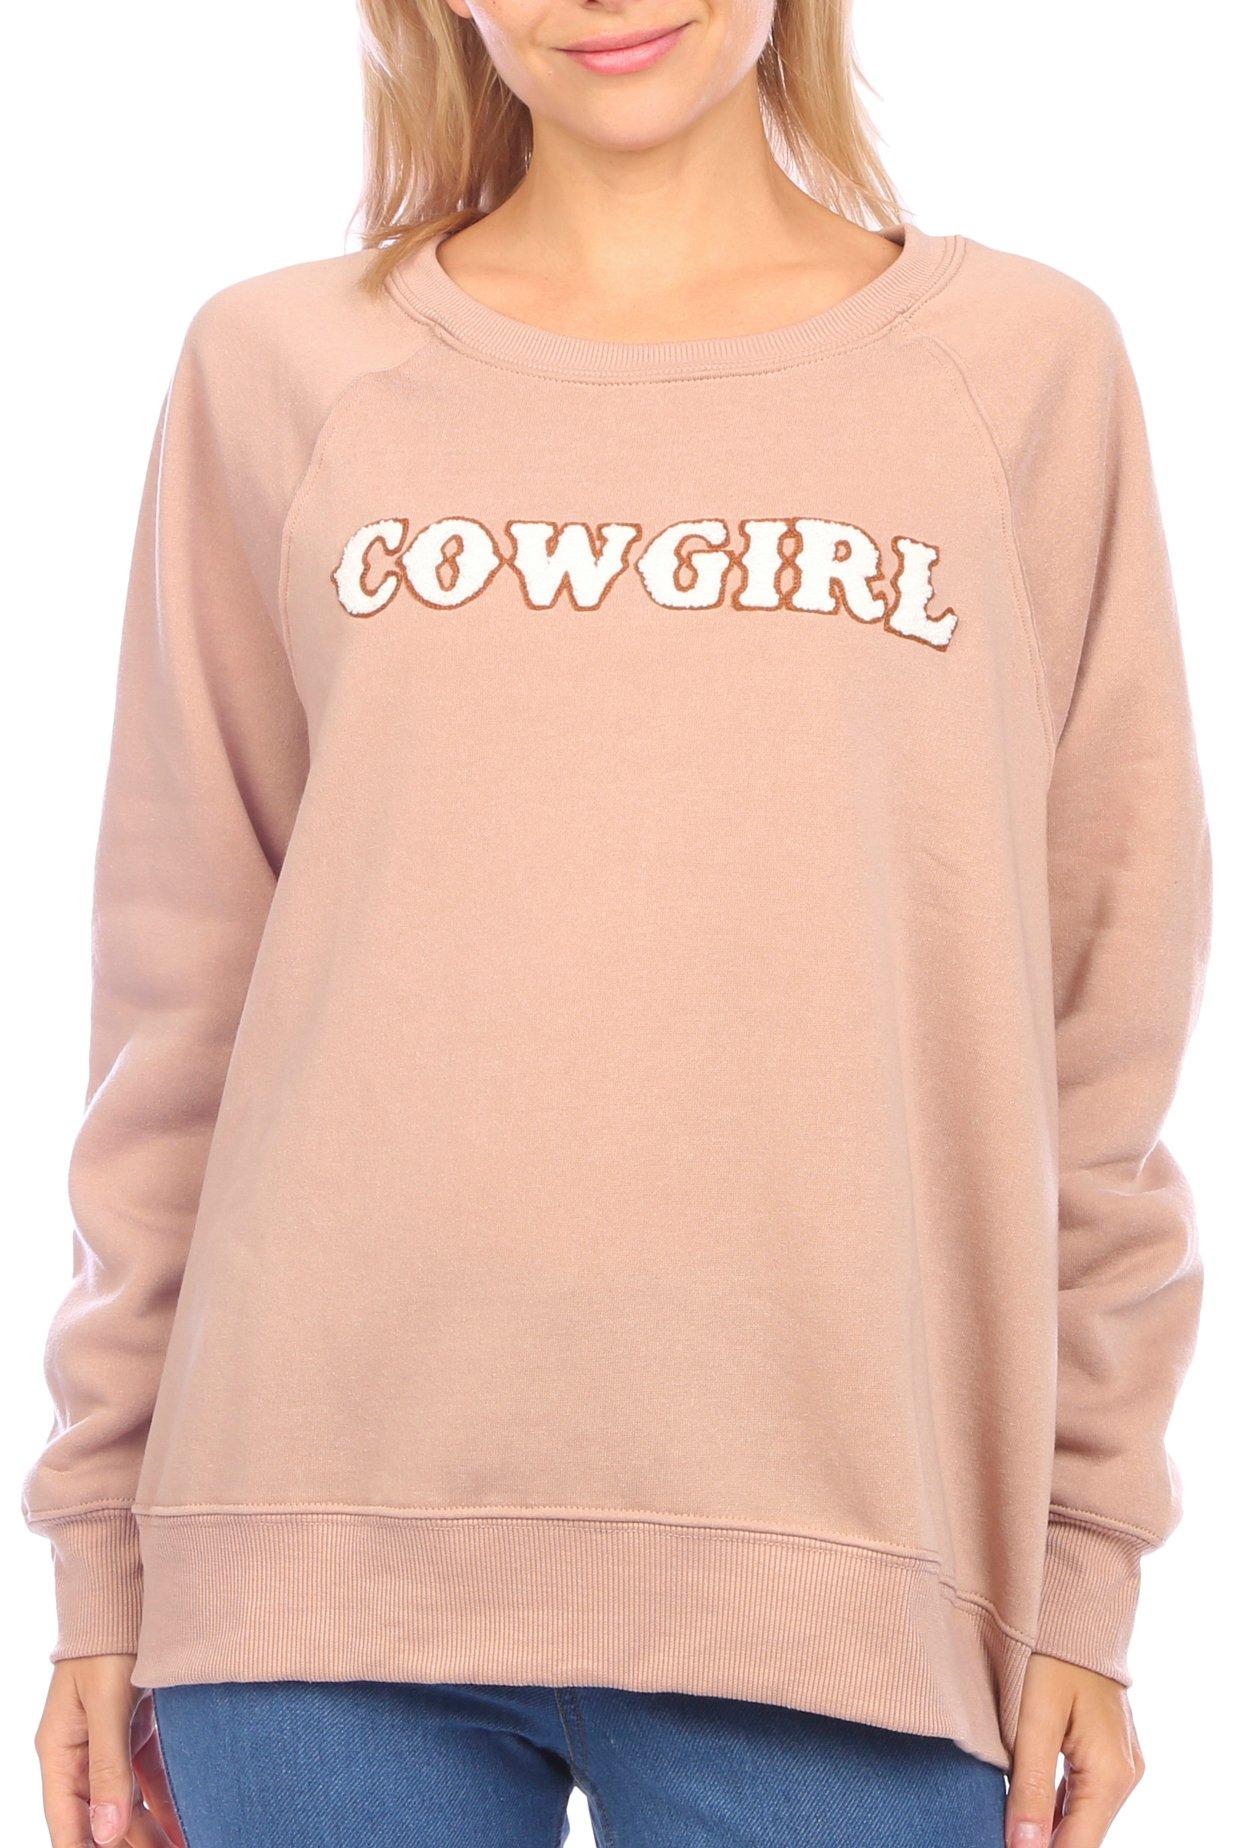 No Comment Juniors Cowgirl Crew Neck Long Sleeve Sweatshirt